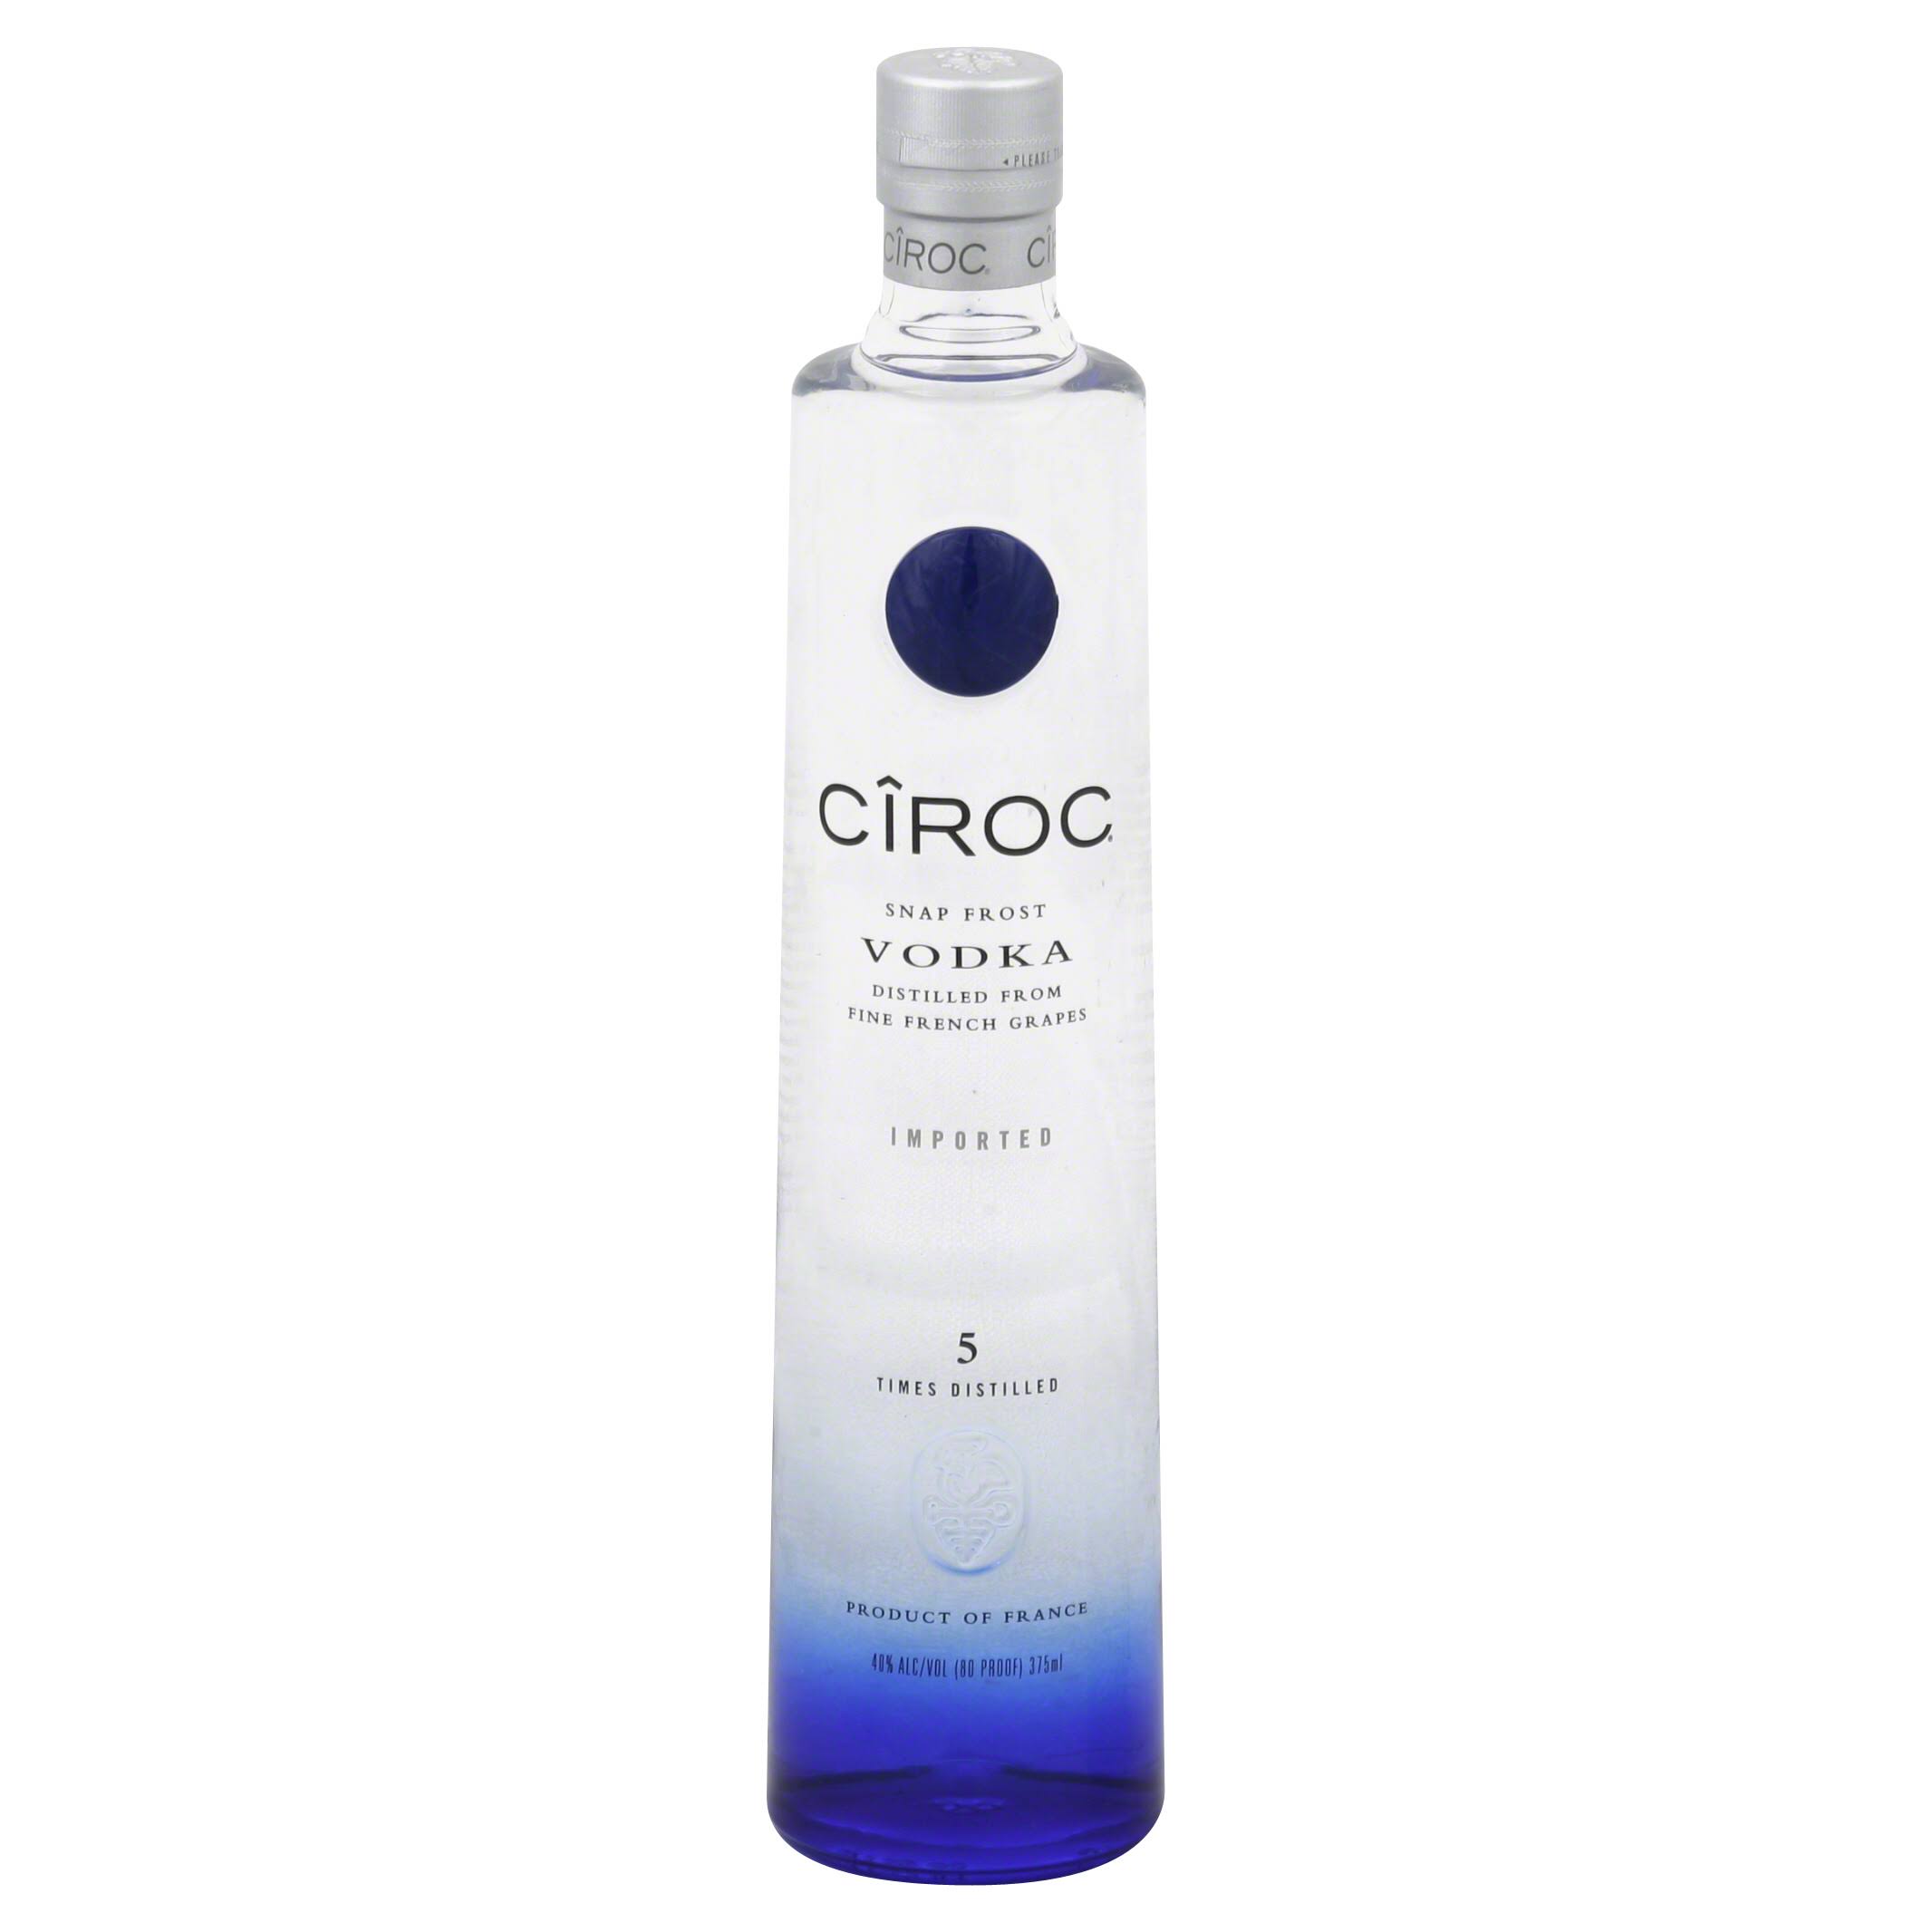 Ciroc Vodka Snap Frost